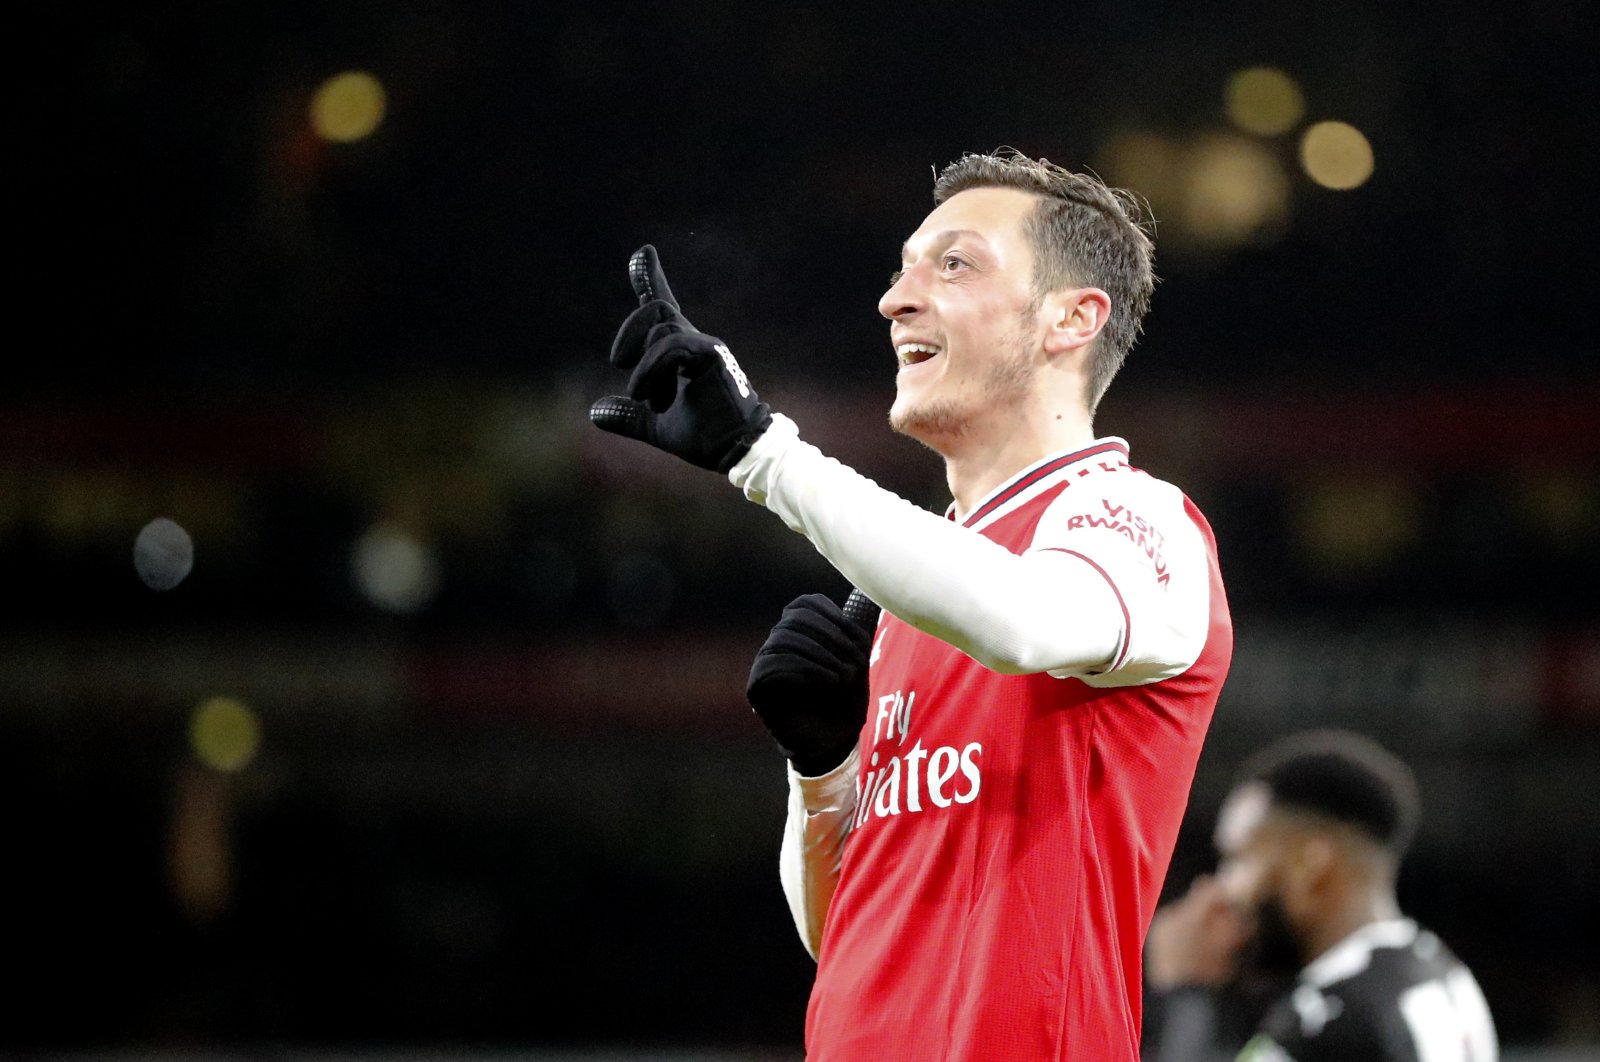 Mesut Özil celebrates a goal during a Premier League match in London, Feb. 16, 2020. (AP Photo)